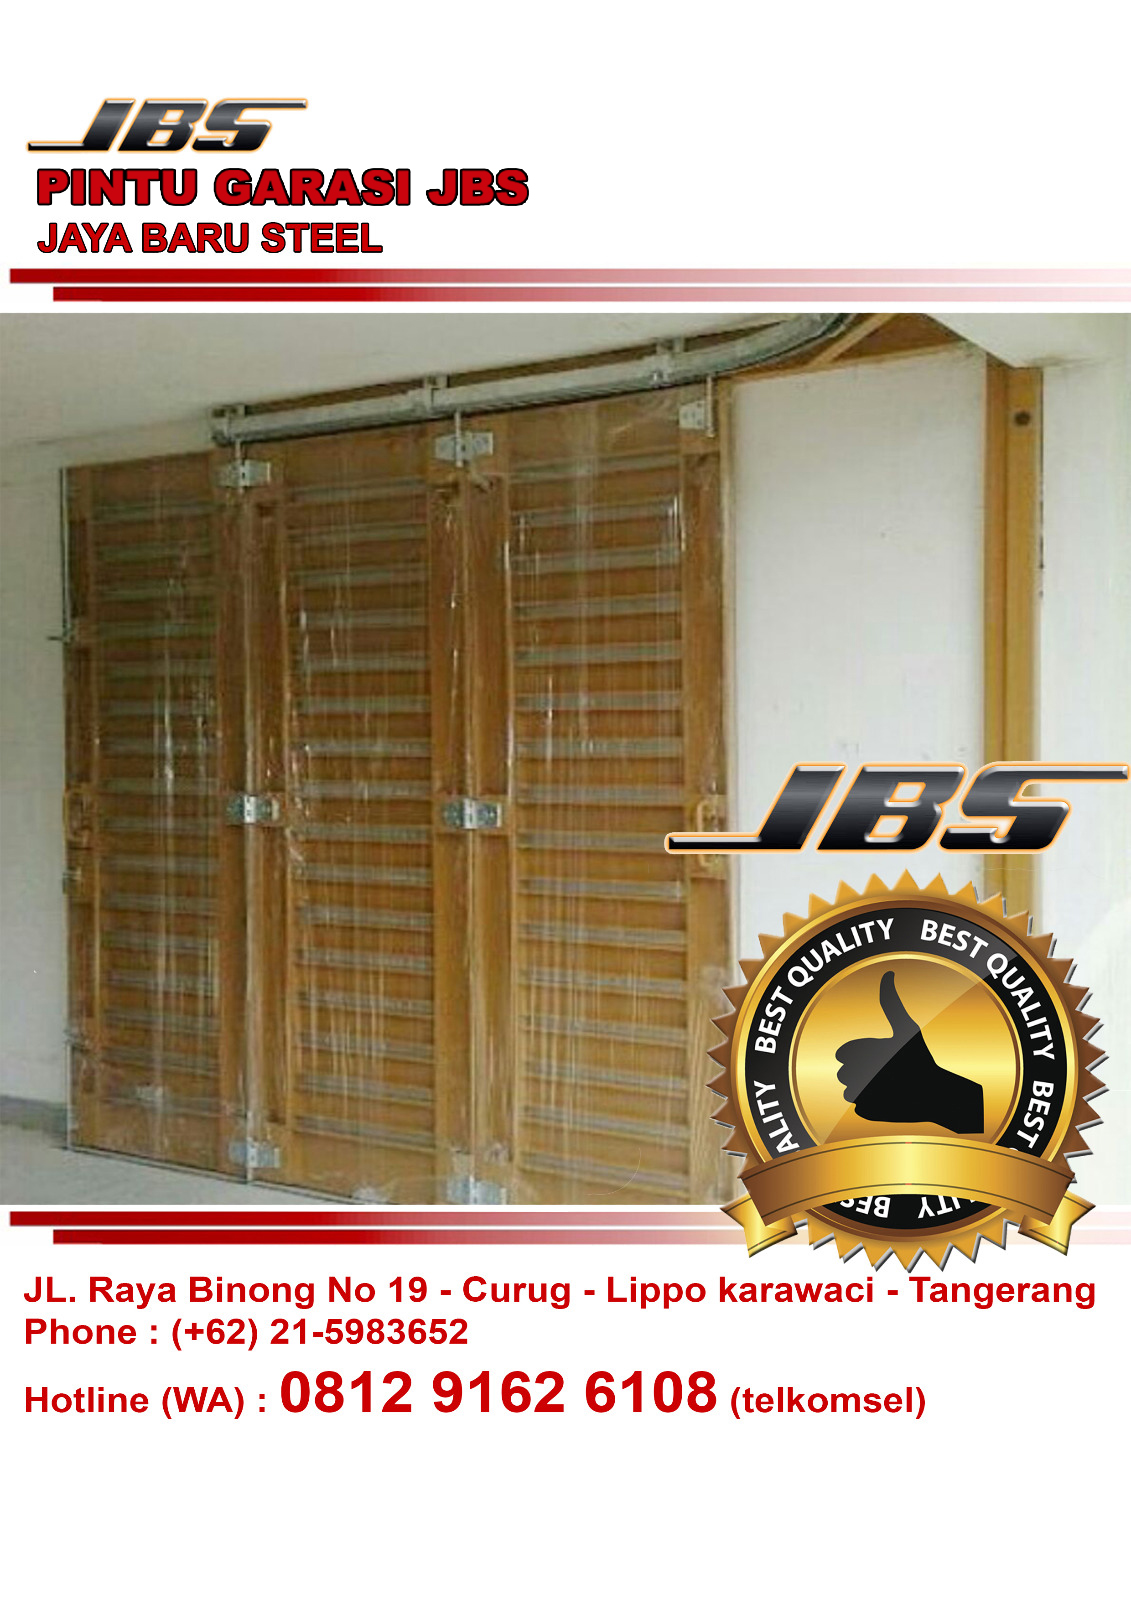  Jual Pintu Garasi Murah Jual Pintu Garasi Di Semarang 